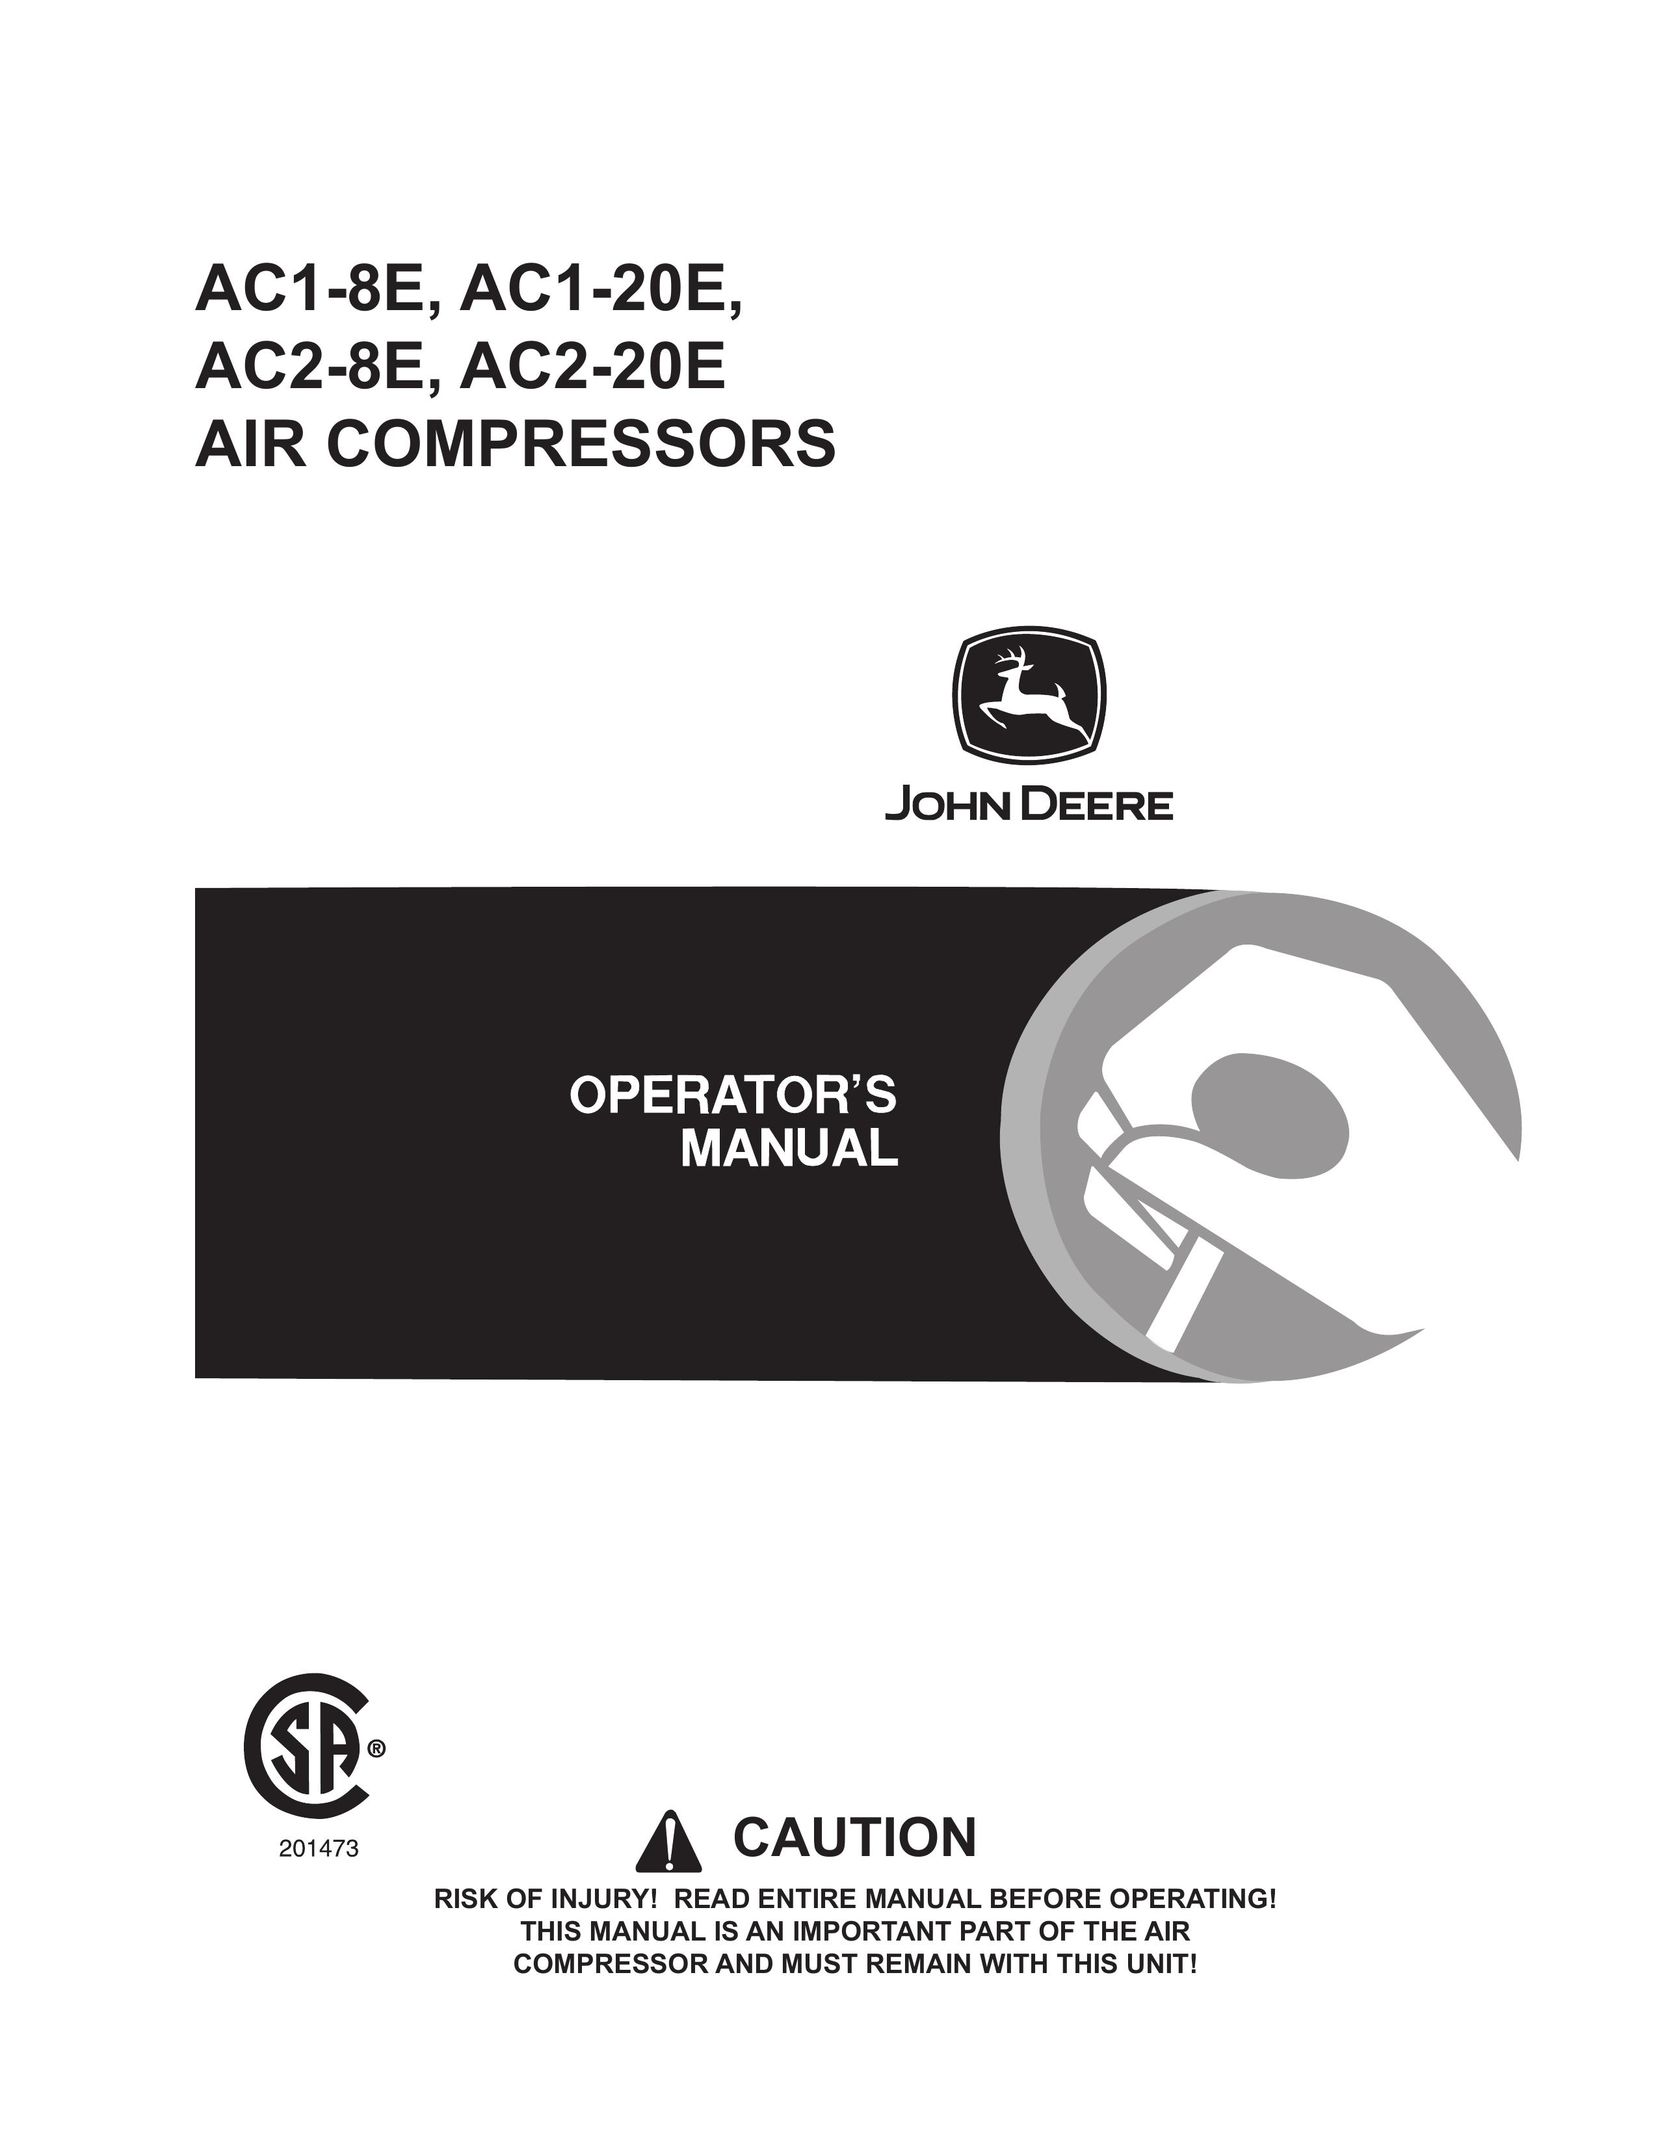 John Deere AC1-8E Air Compressor User Manual